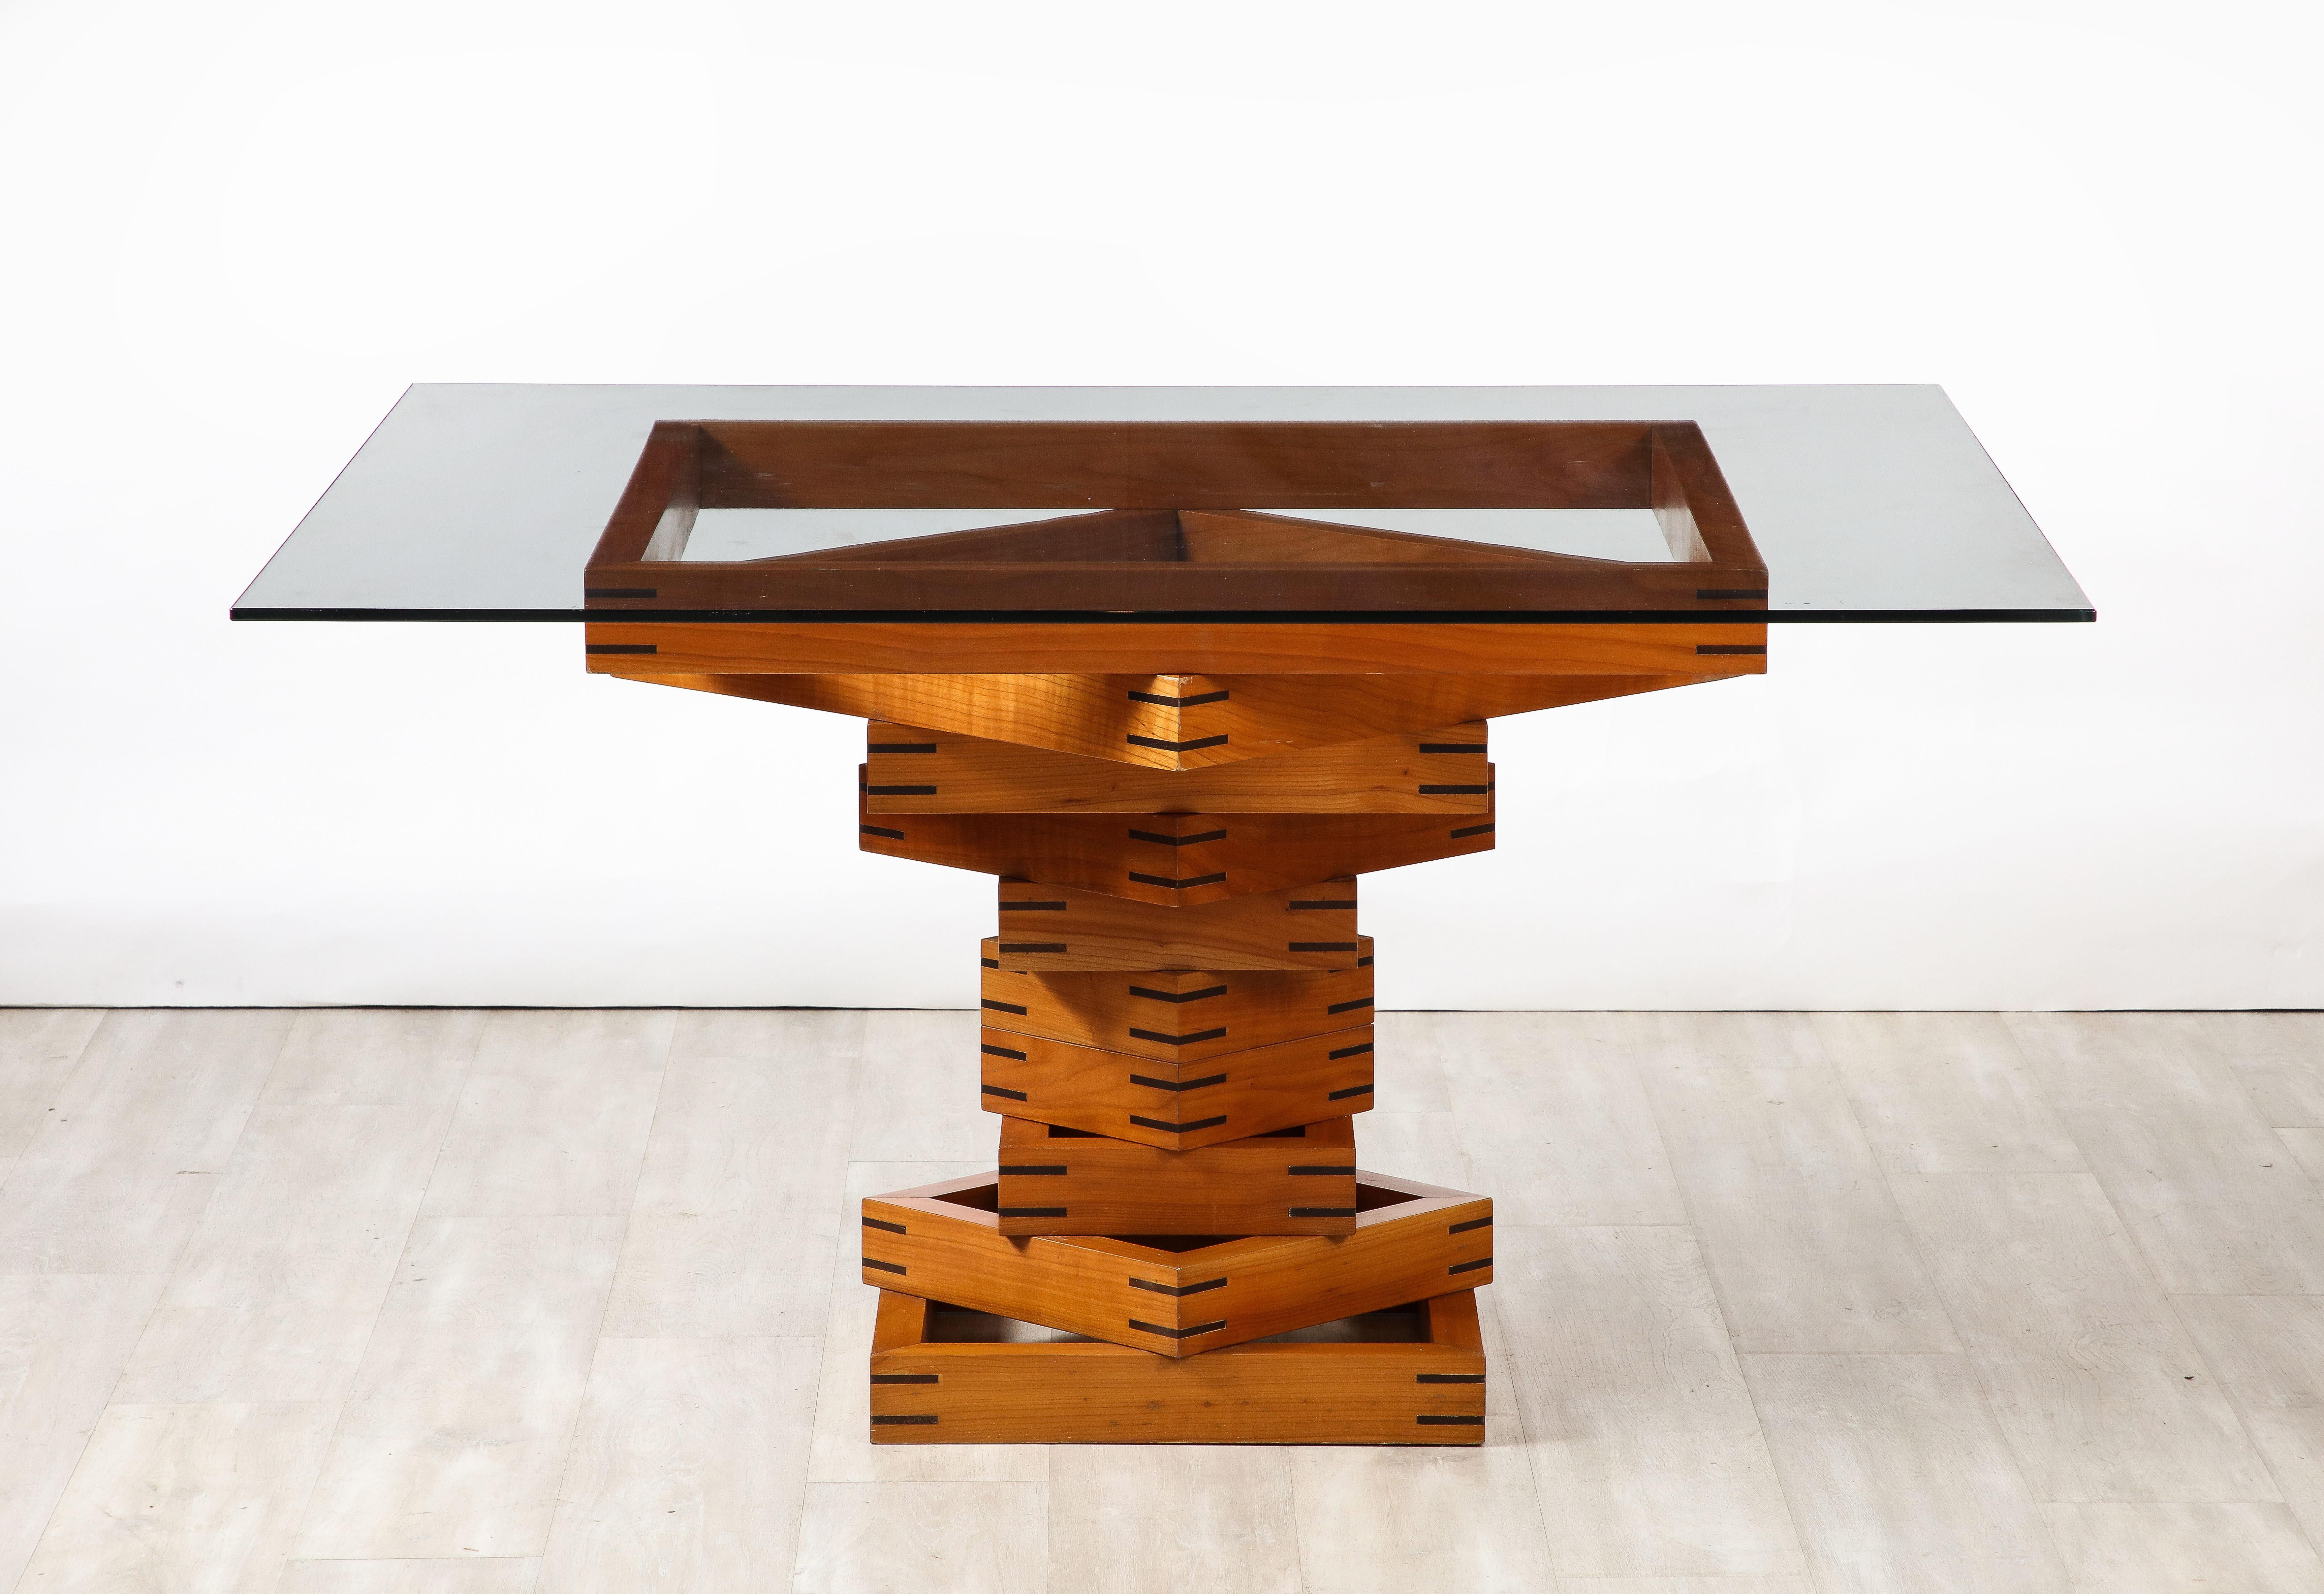  Ferdinando Meccani “Corinto” Dining Table Italy, 1978 For Sale 5